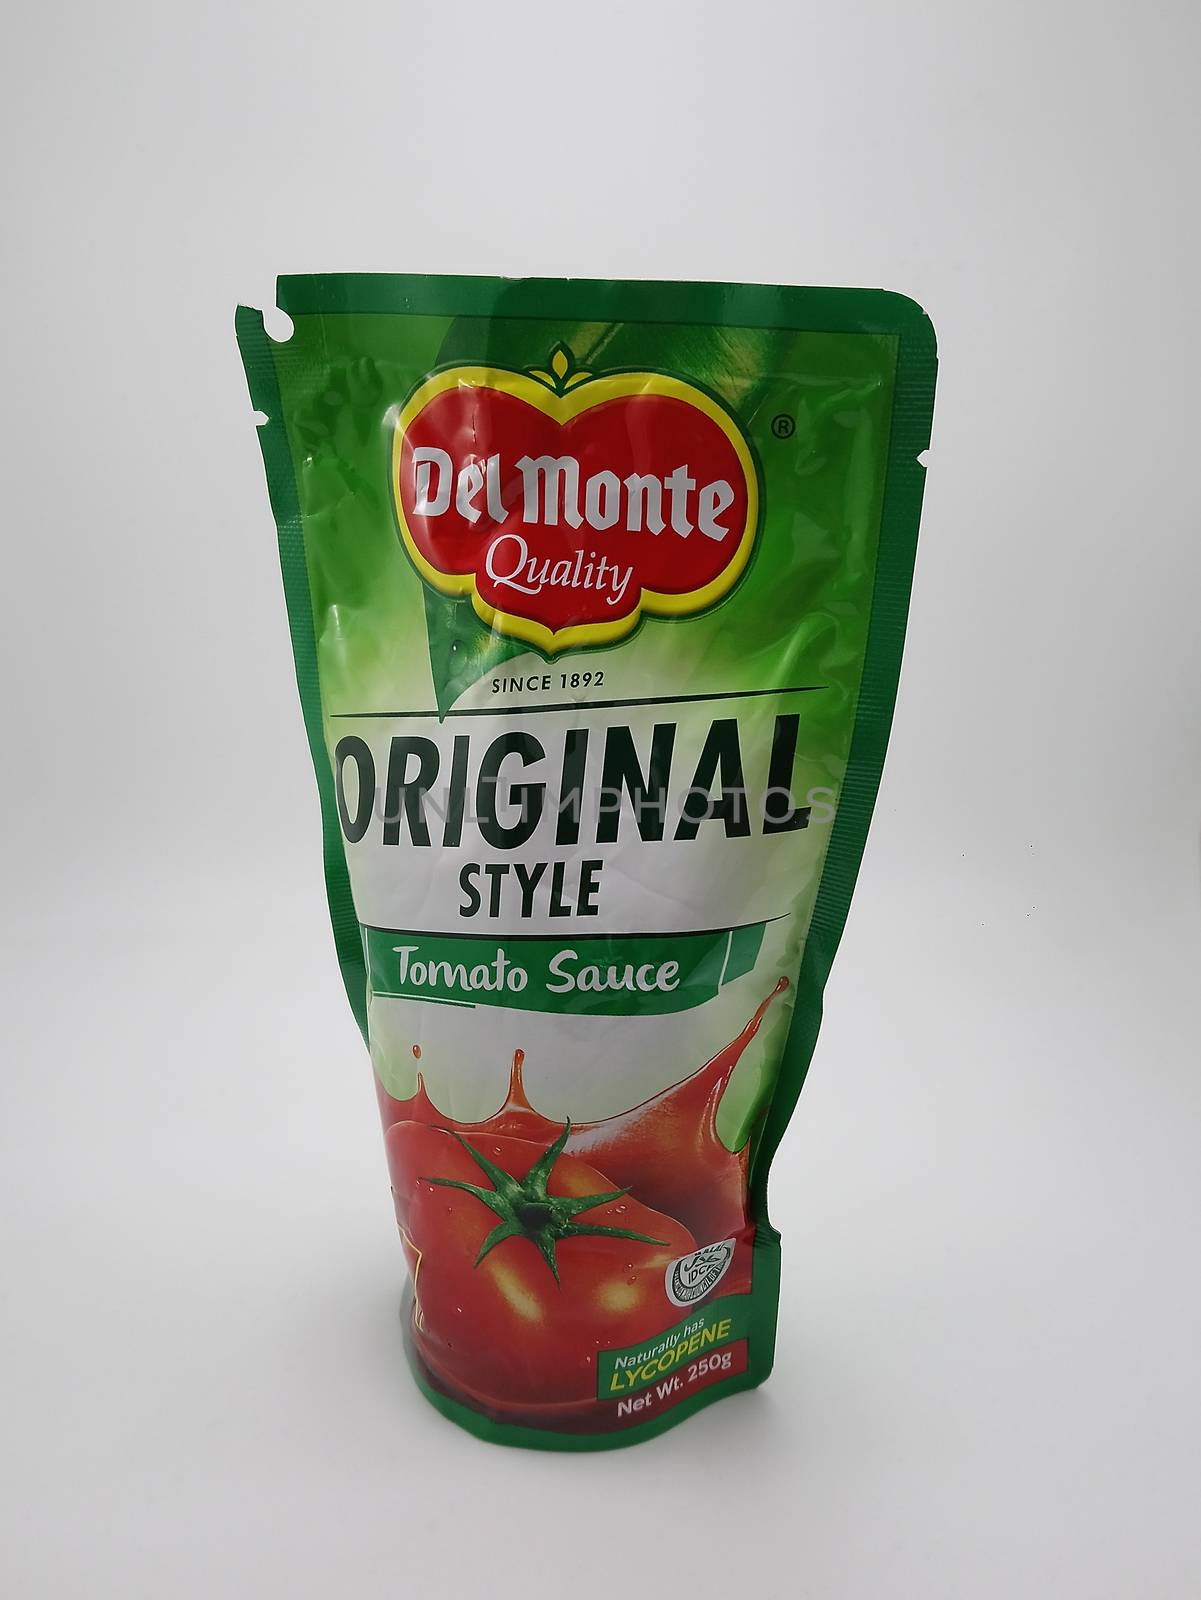 MANILA, PH - SEPT 25 - Del monte original style tomato sauce on September 25, 2020 in Manila, Philippines.